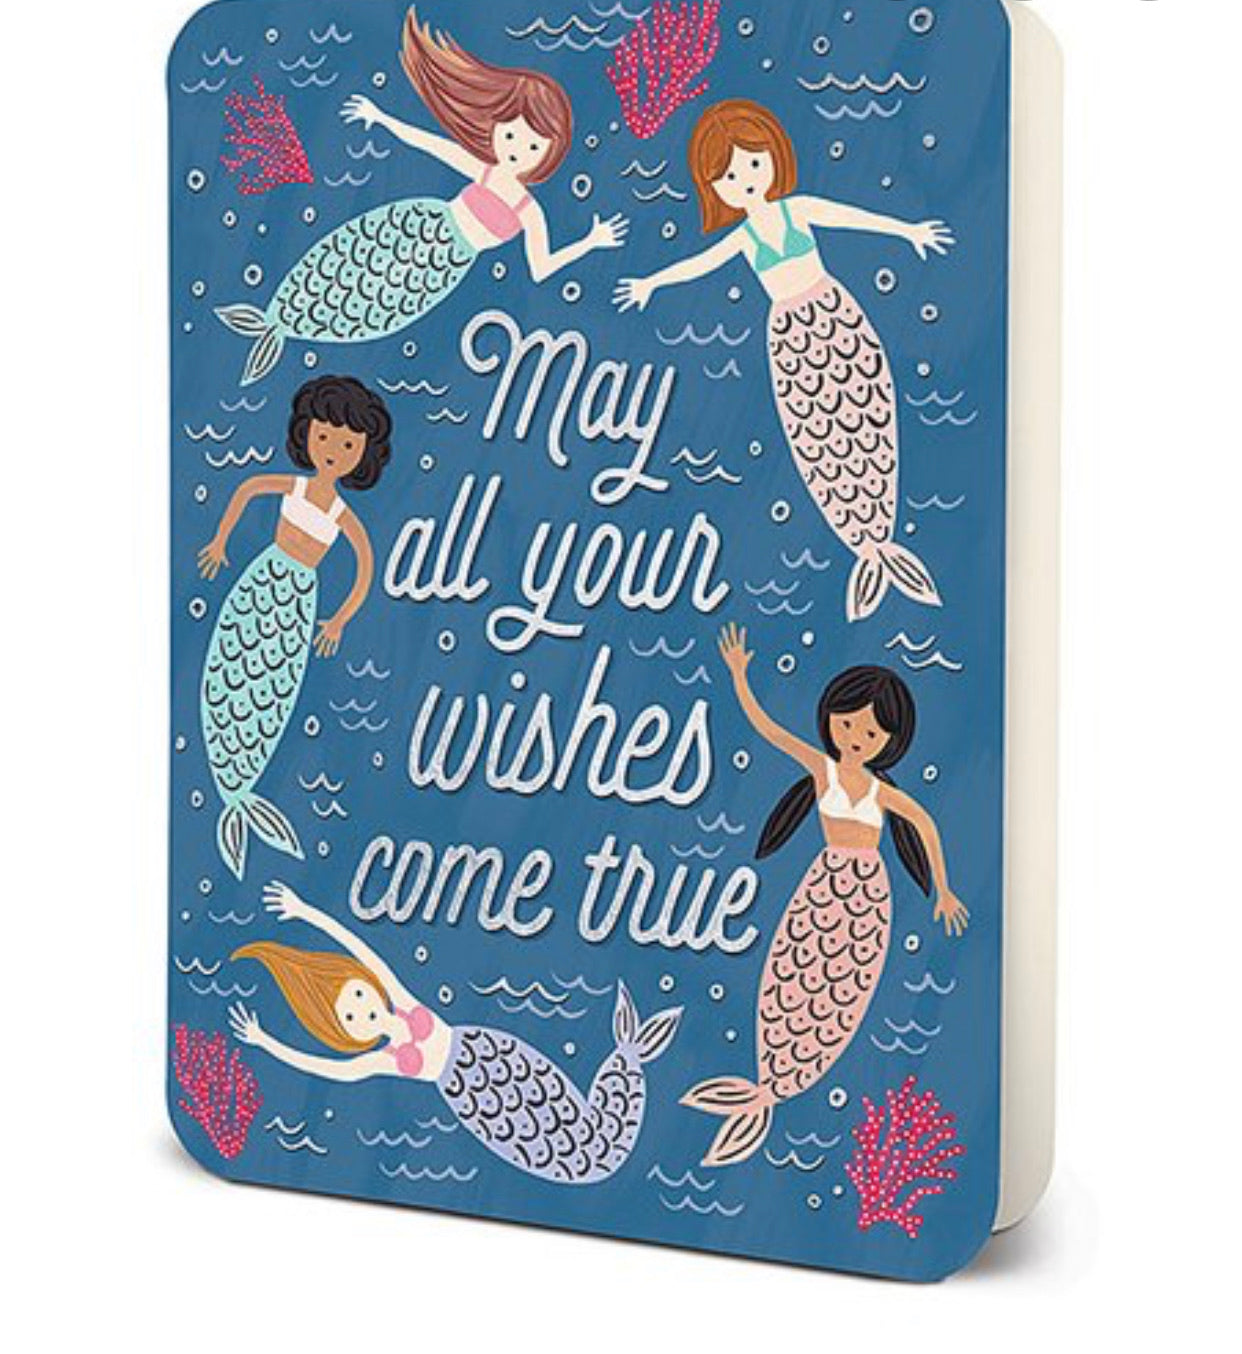 Studio Oh! “Wishes Come True” Mermaids Card